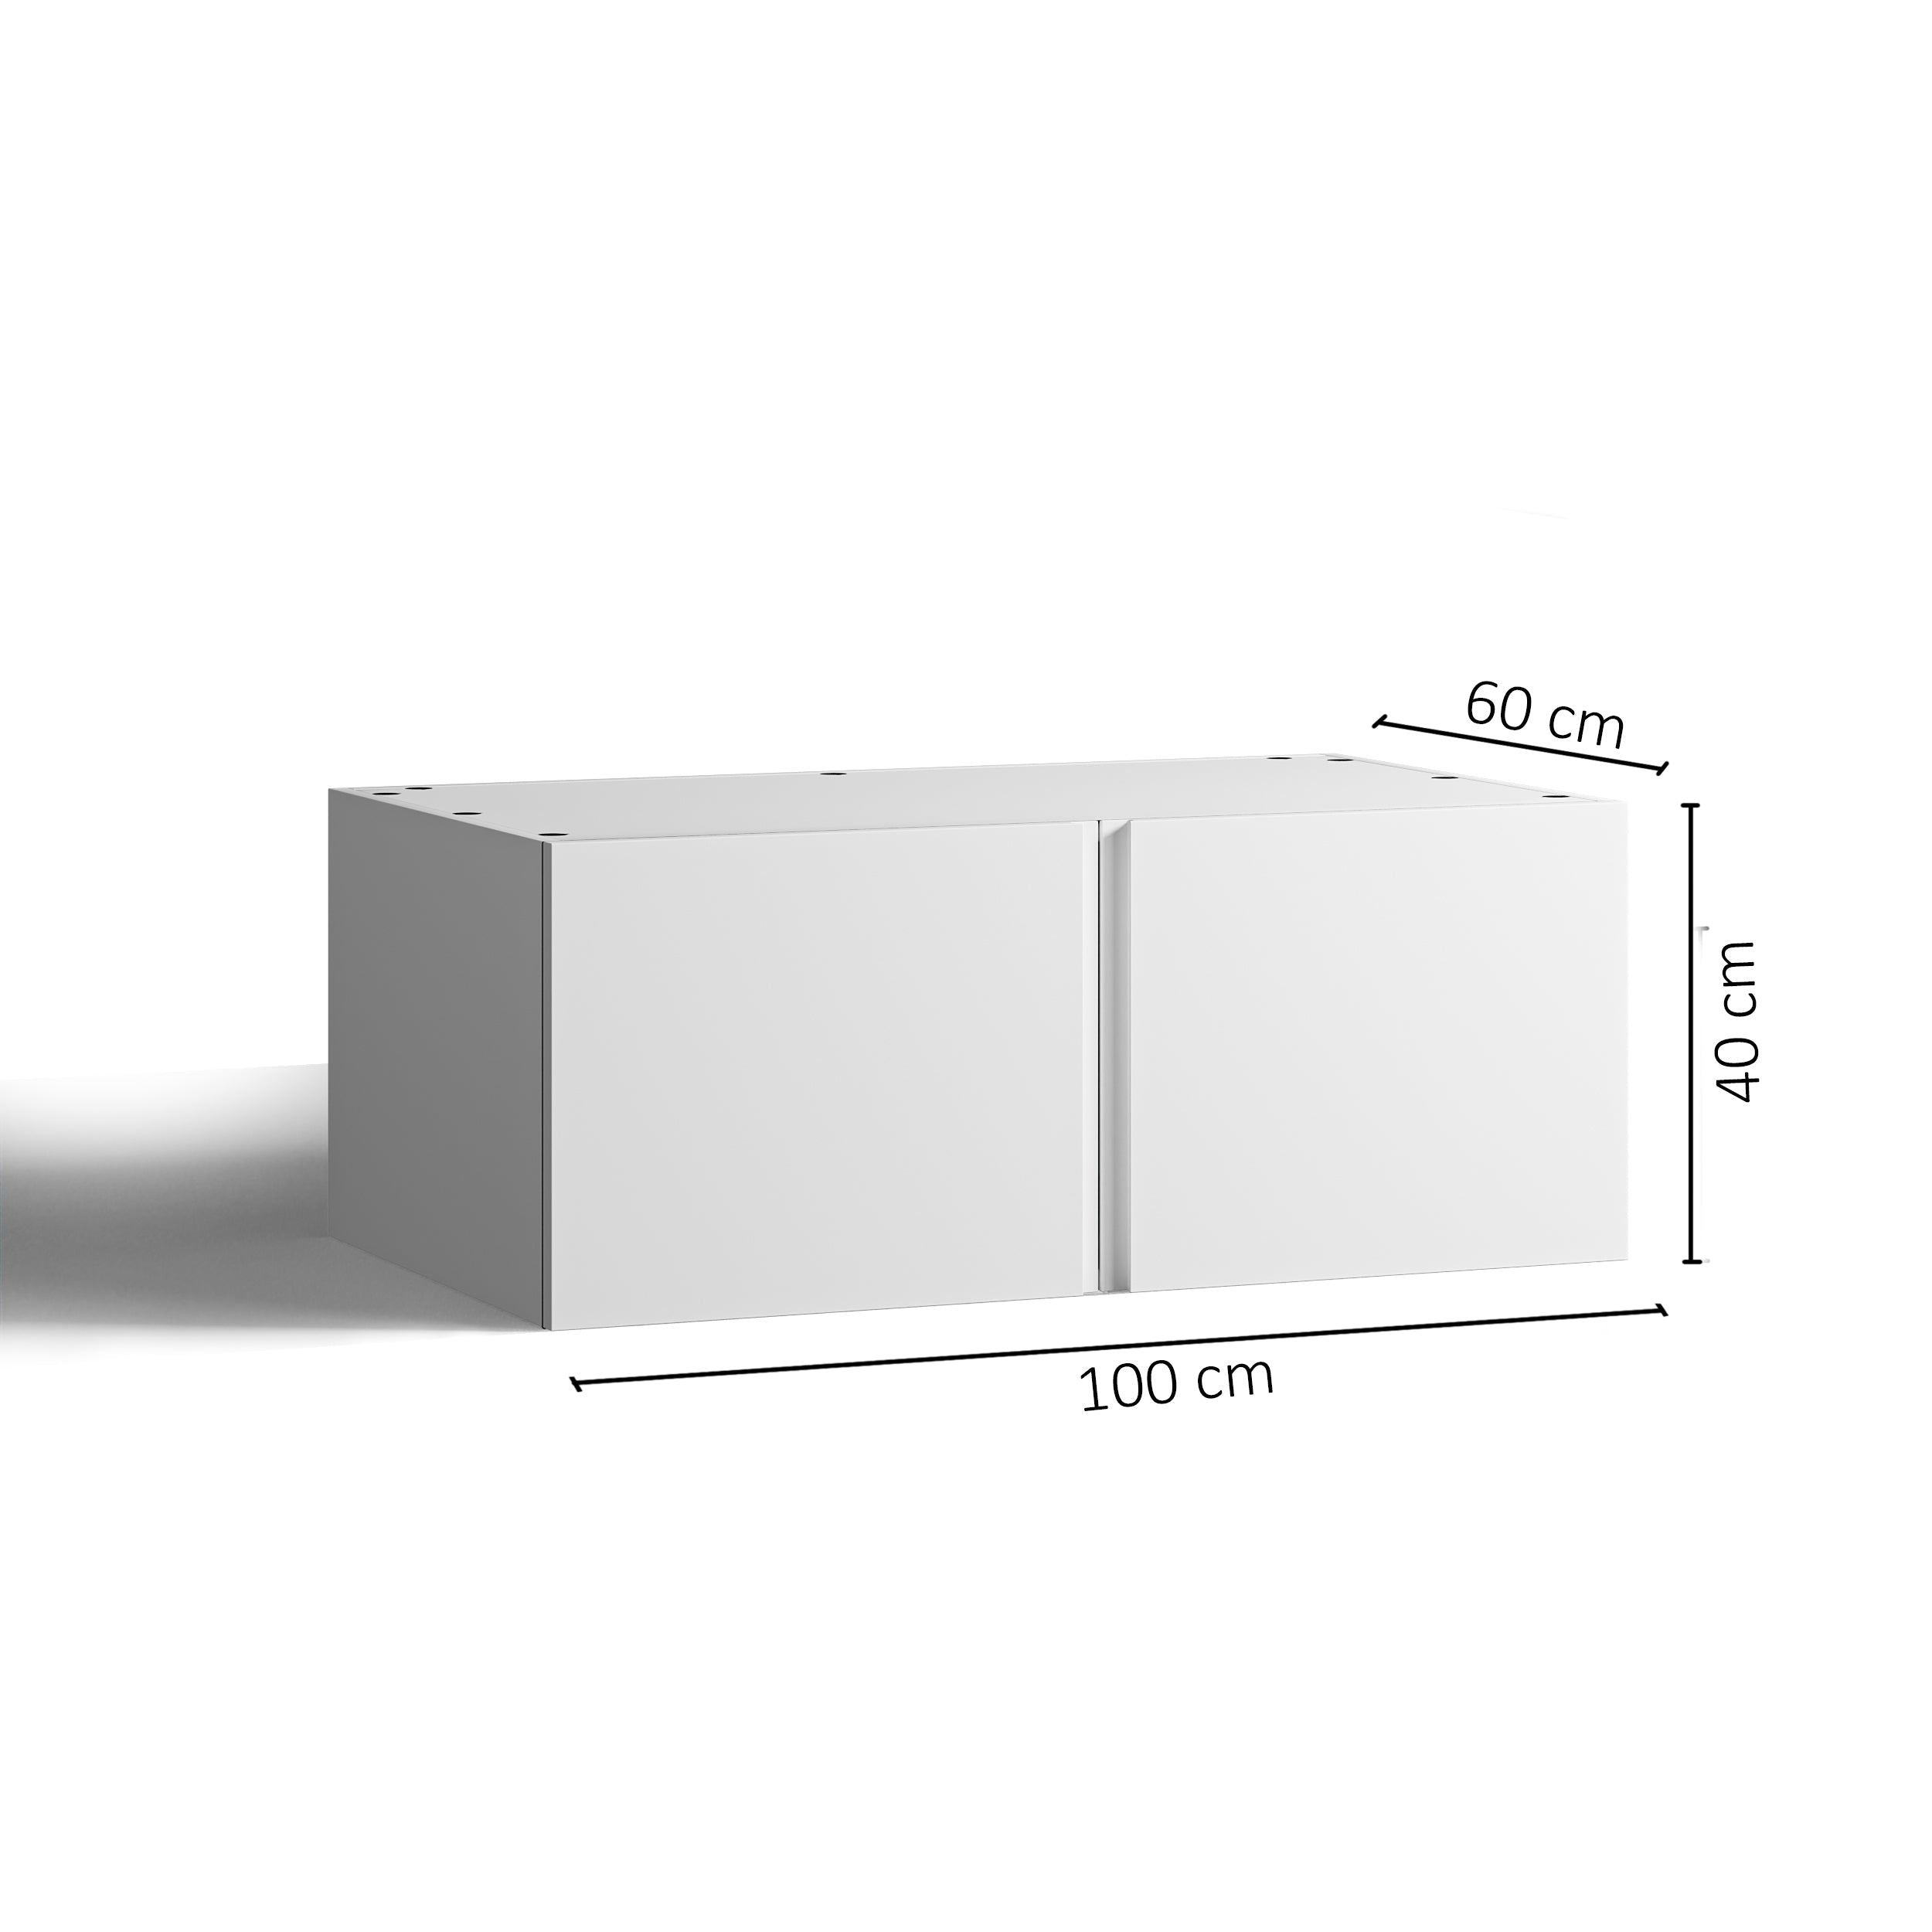 100x40 - Cabinet (58cm D) w 2 Doors - Finger Pull - RAW - PAX